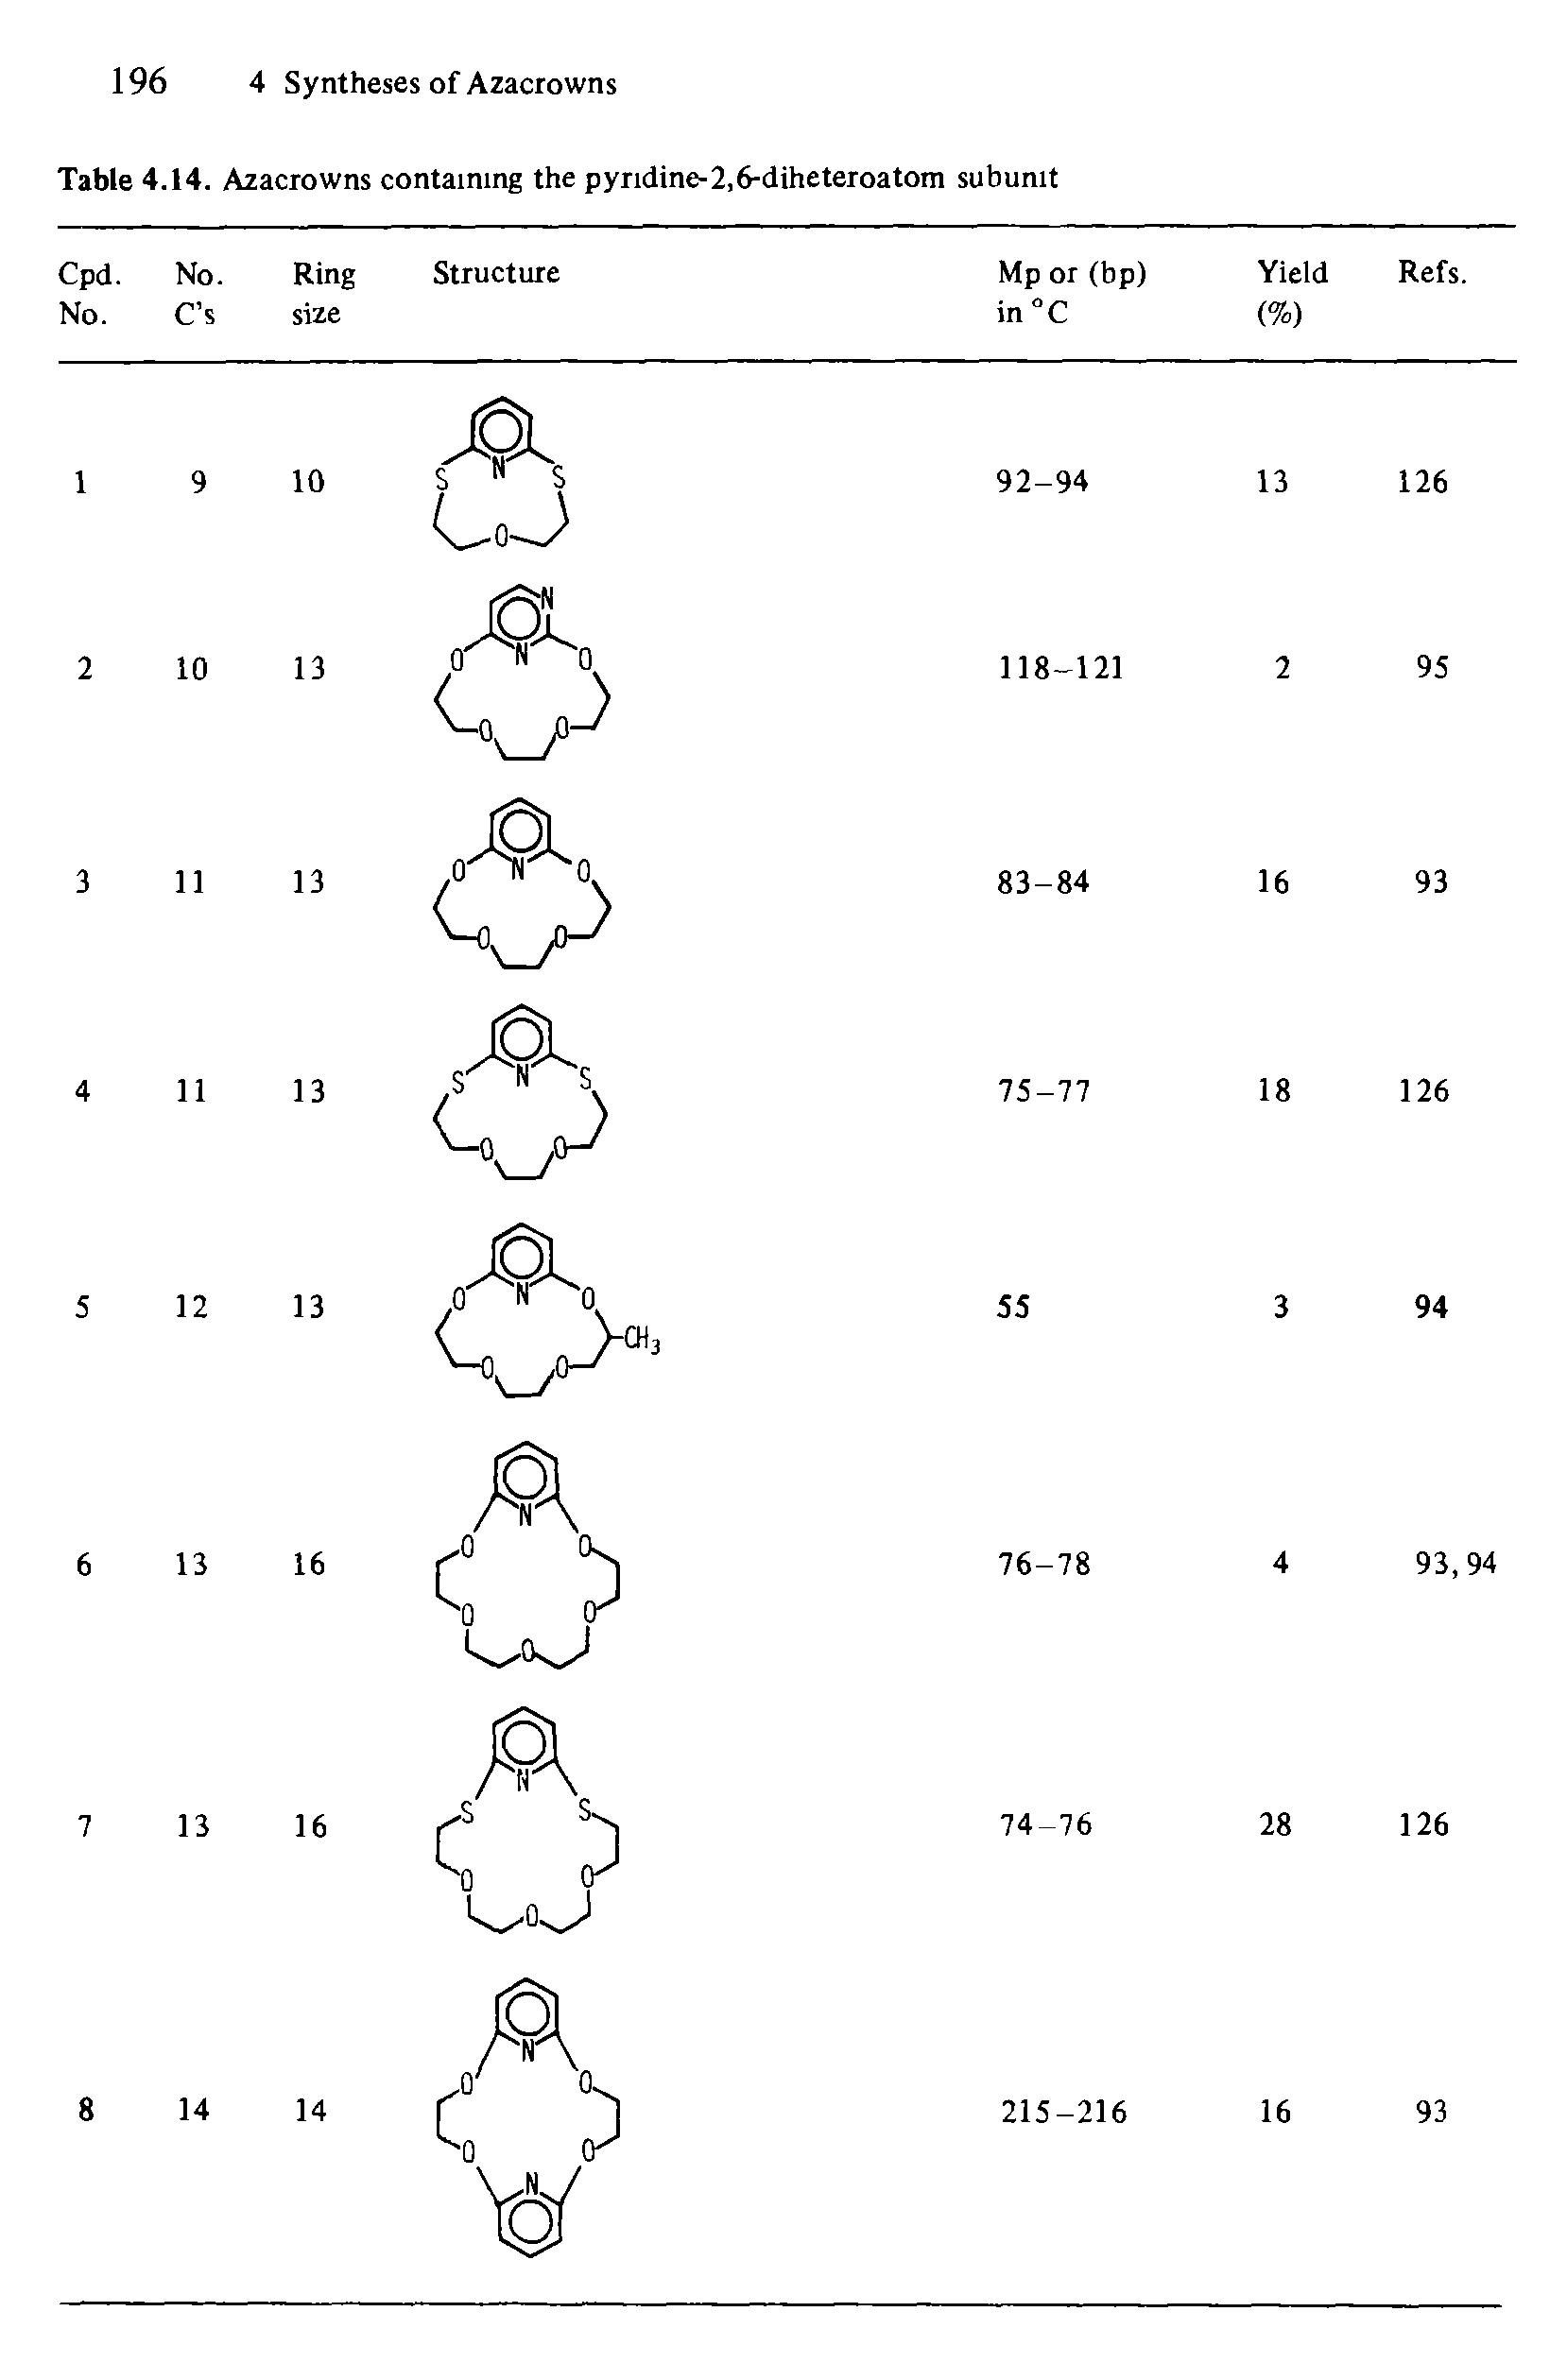 Table 4.14. Azacrowns containing the pyridine-2,6-diheteroatom subunit...